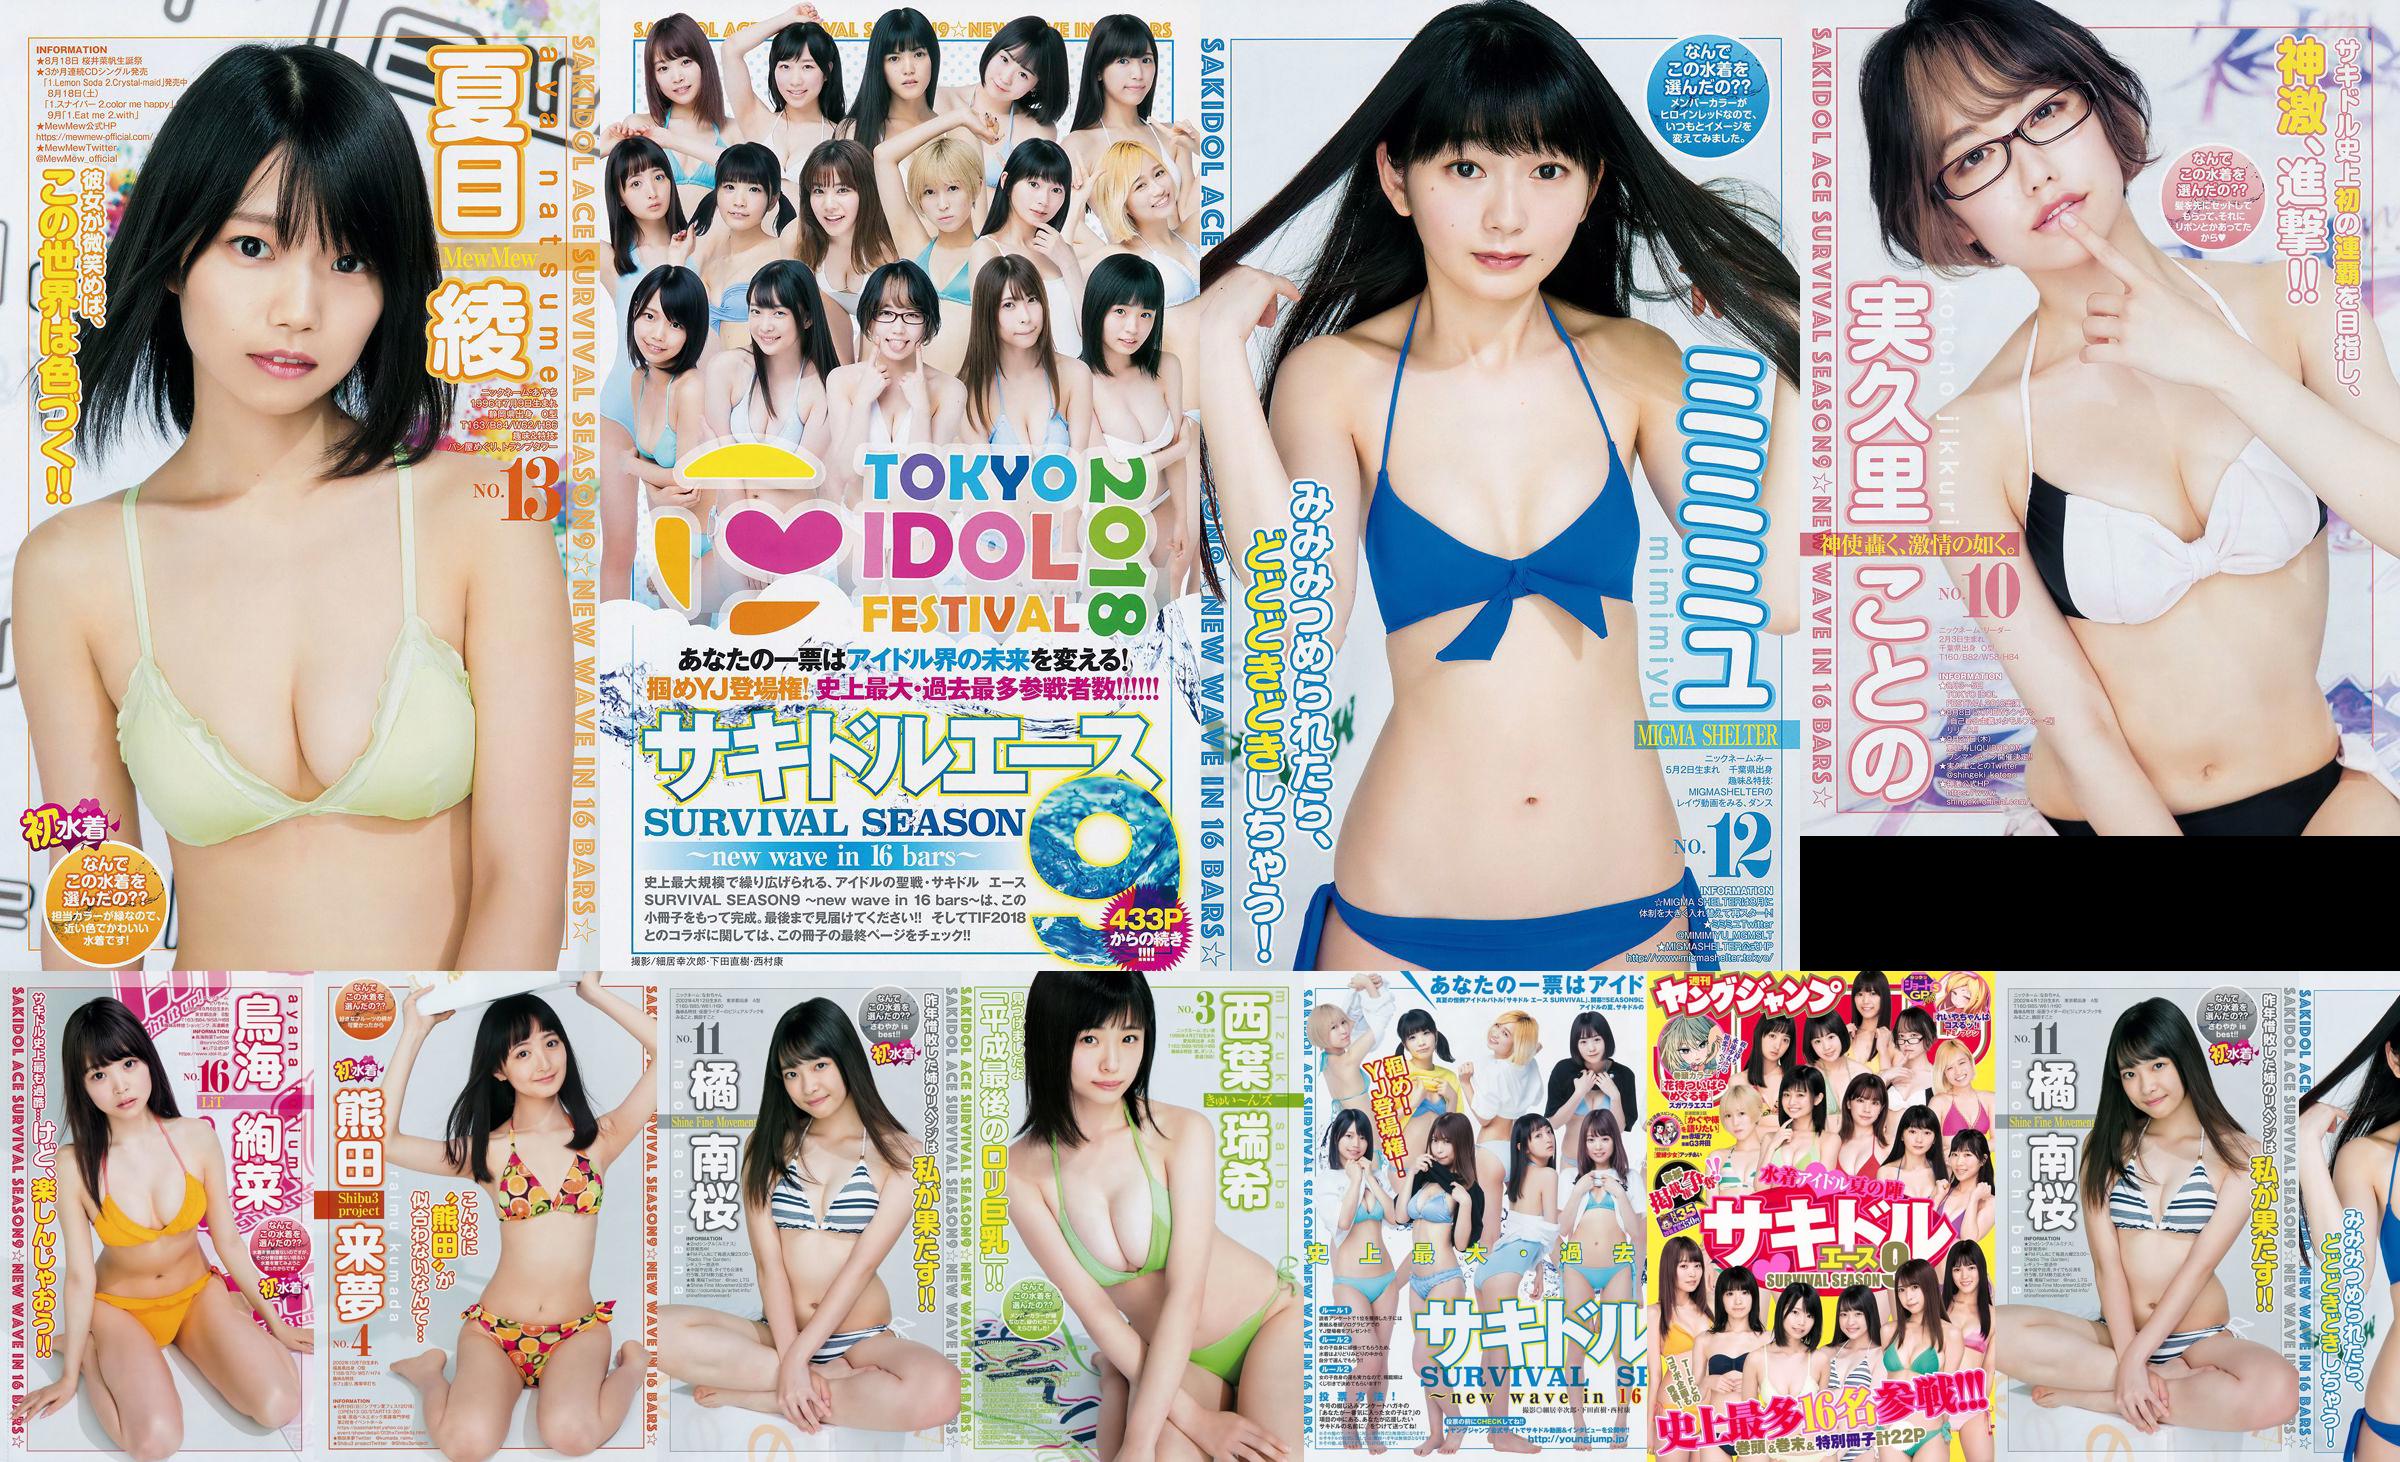 [FLASH] Ikumi Hisamatsu Risa Hirako Ren Ishikawa Angel Moe AKB48 Kaho Shibuya Misuzu Hayashi Ririka 2015.04.21 Photo Toshi No.ca0b30 Page 1